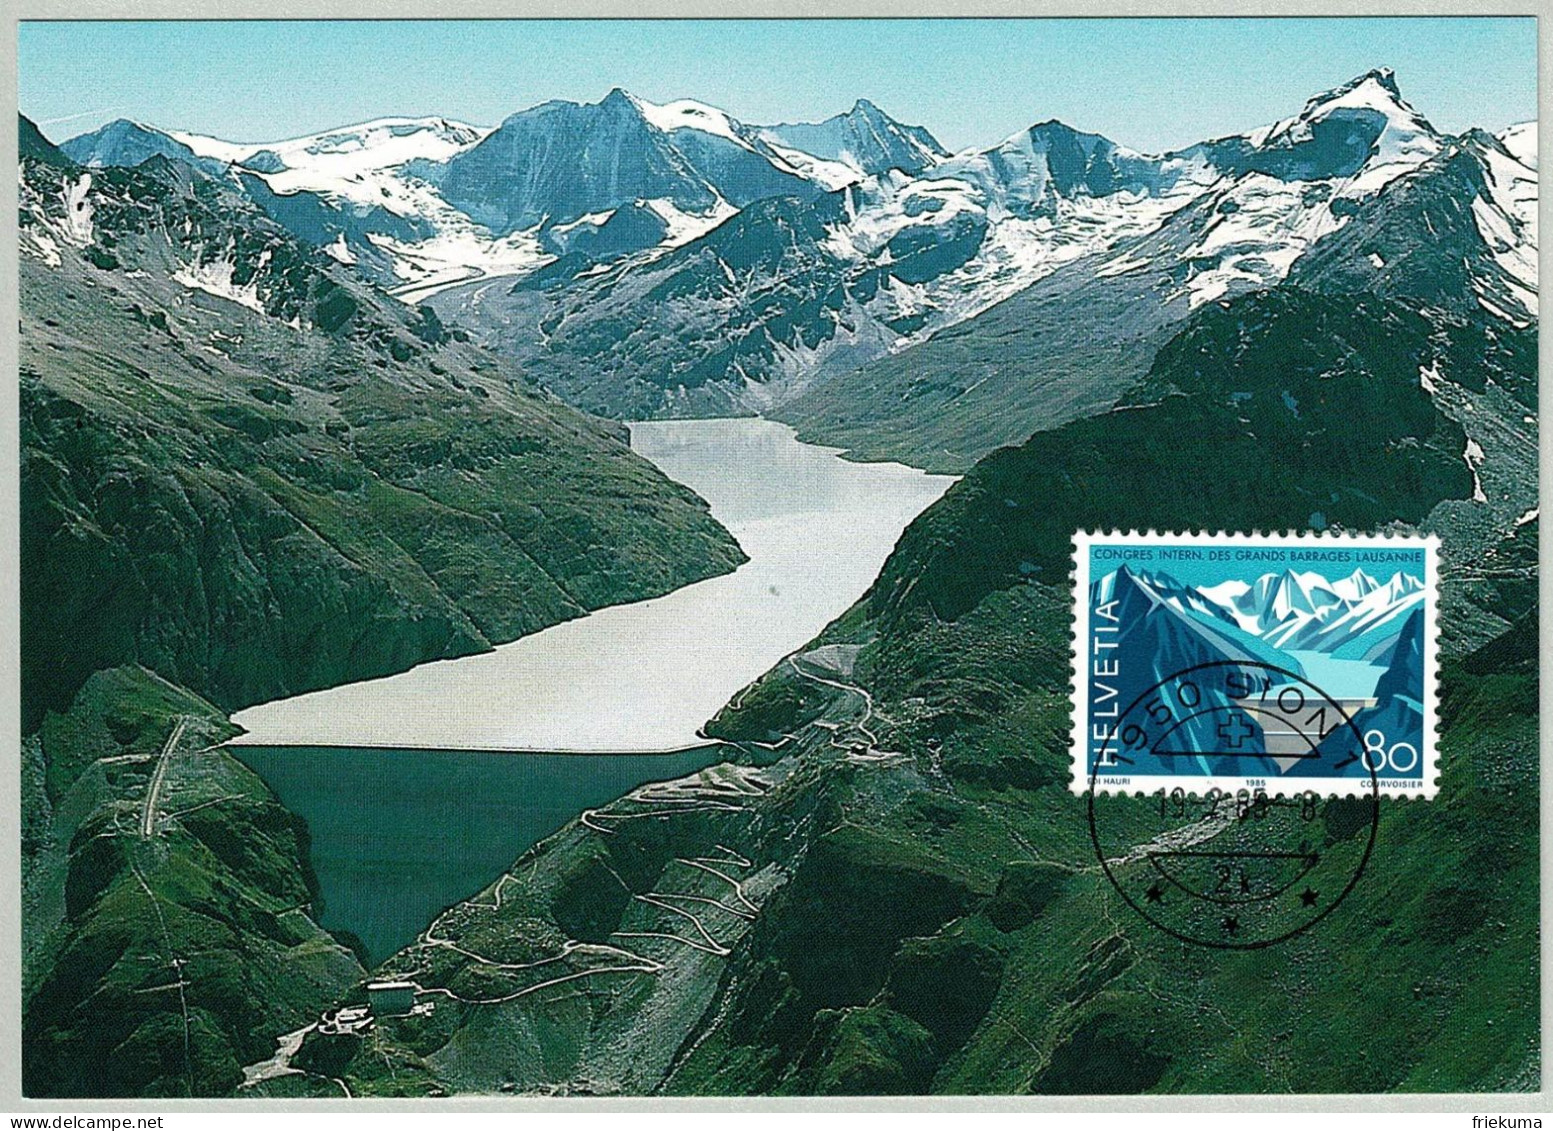 Schweiz / Helvetia 1985, Maximumkarte Kongress Für Talsperren Lausanne, Staumauer Grand-Dixence, Barrage / Dam, Sion - Eau